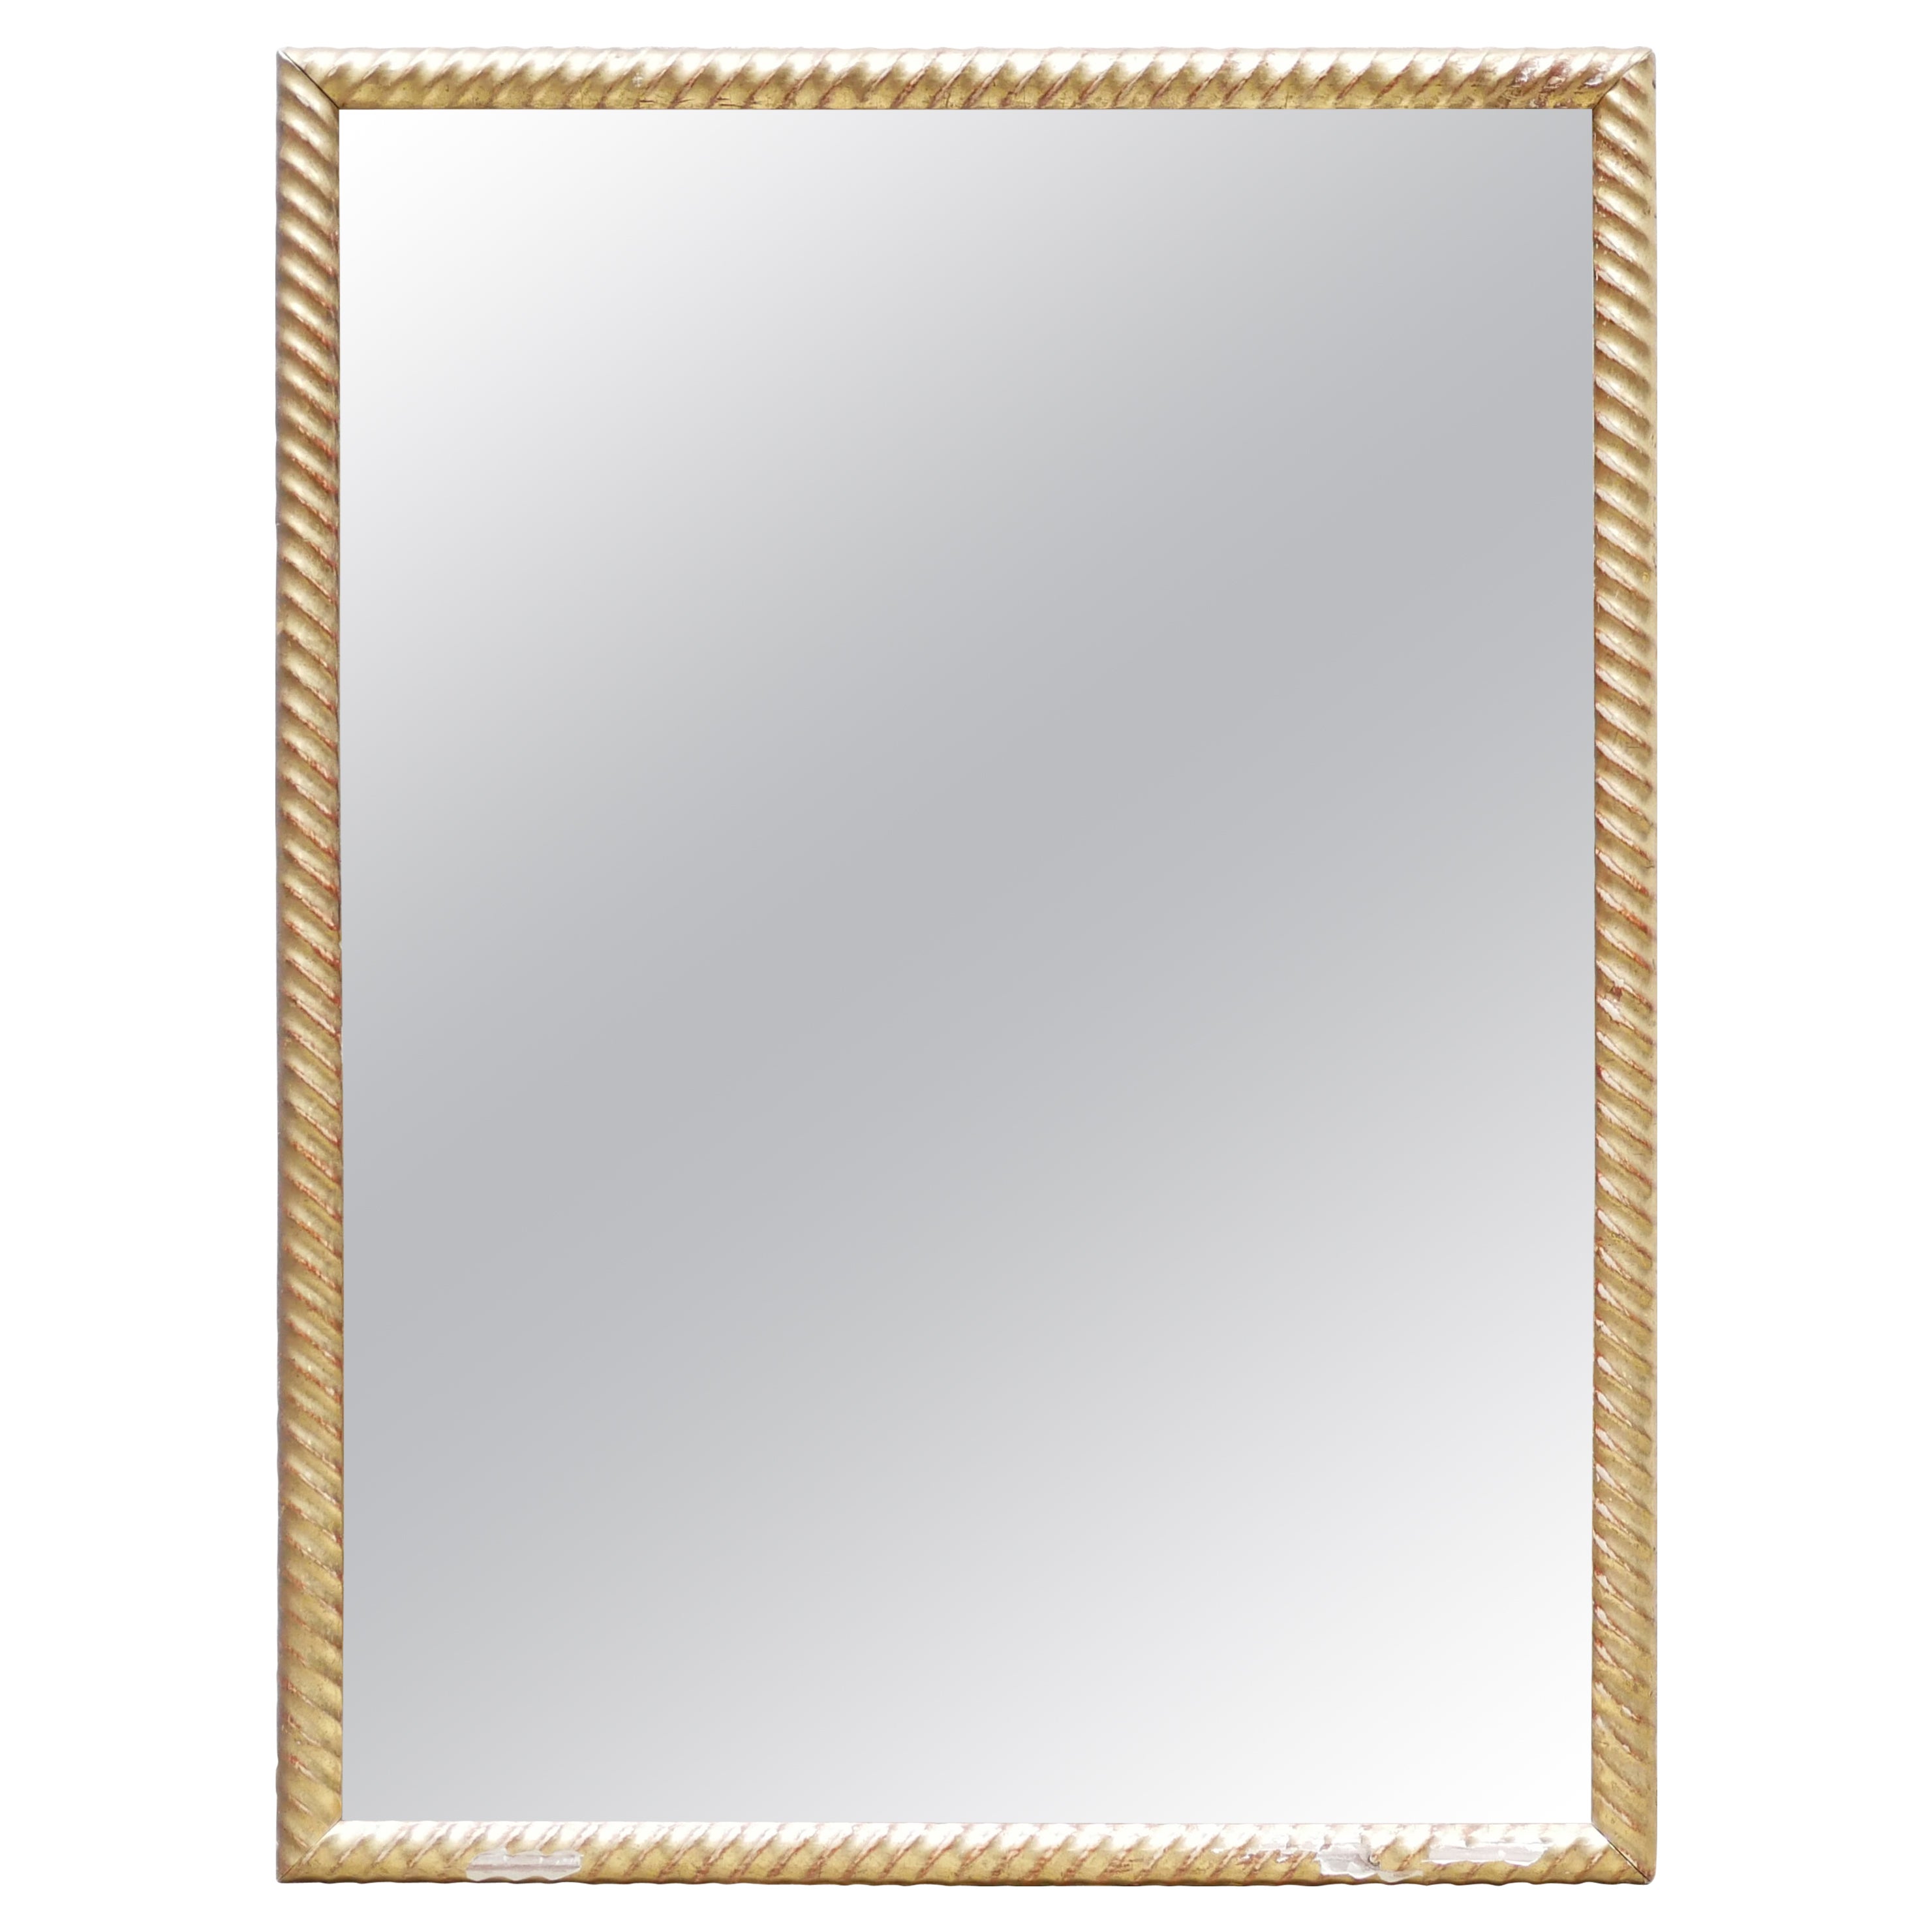 Antique gilded wood mirror 70cm x 52cm For Sale